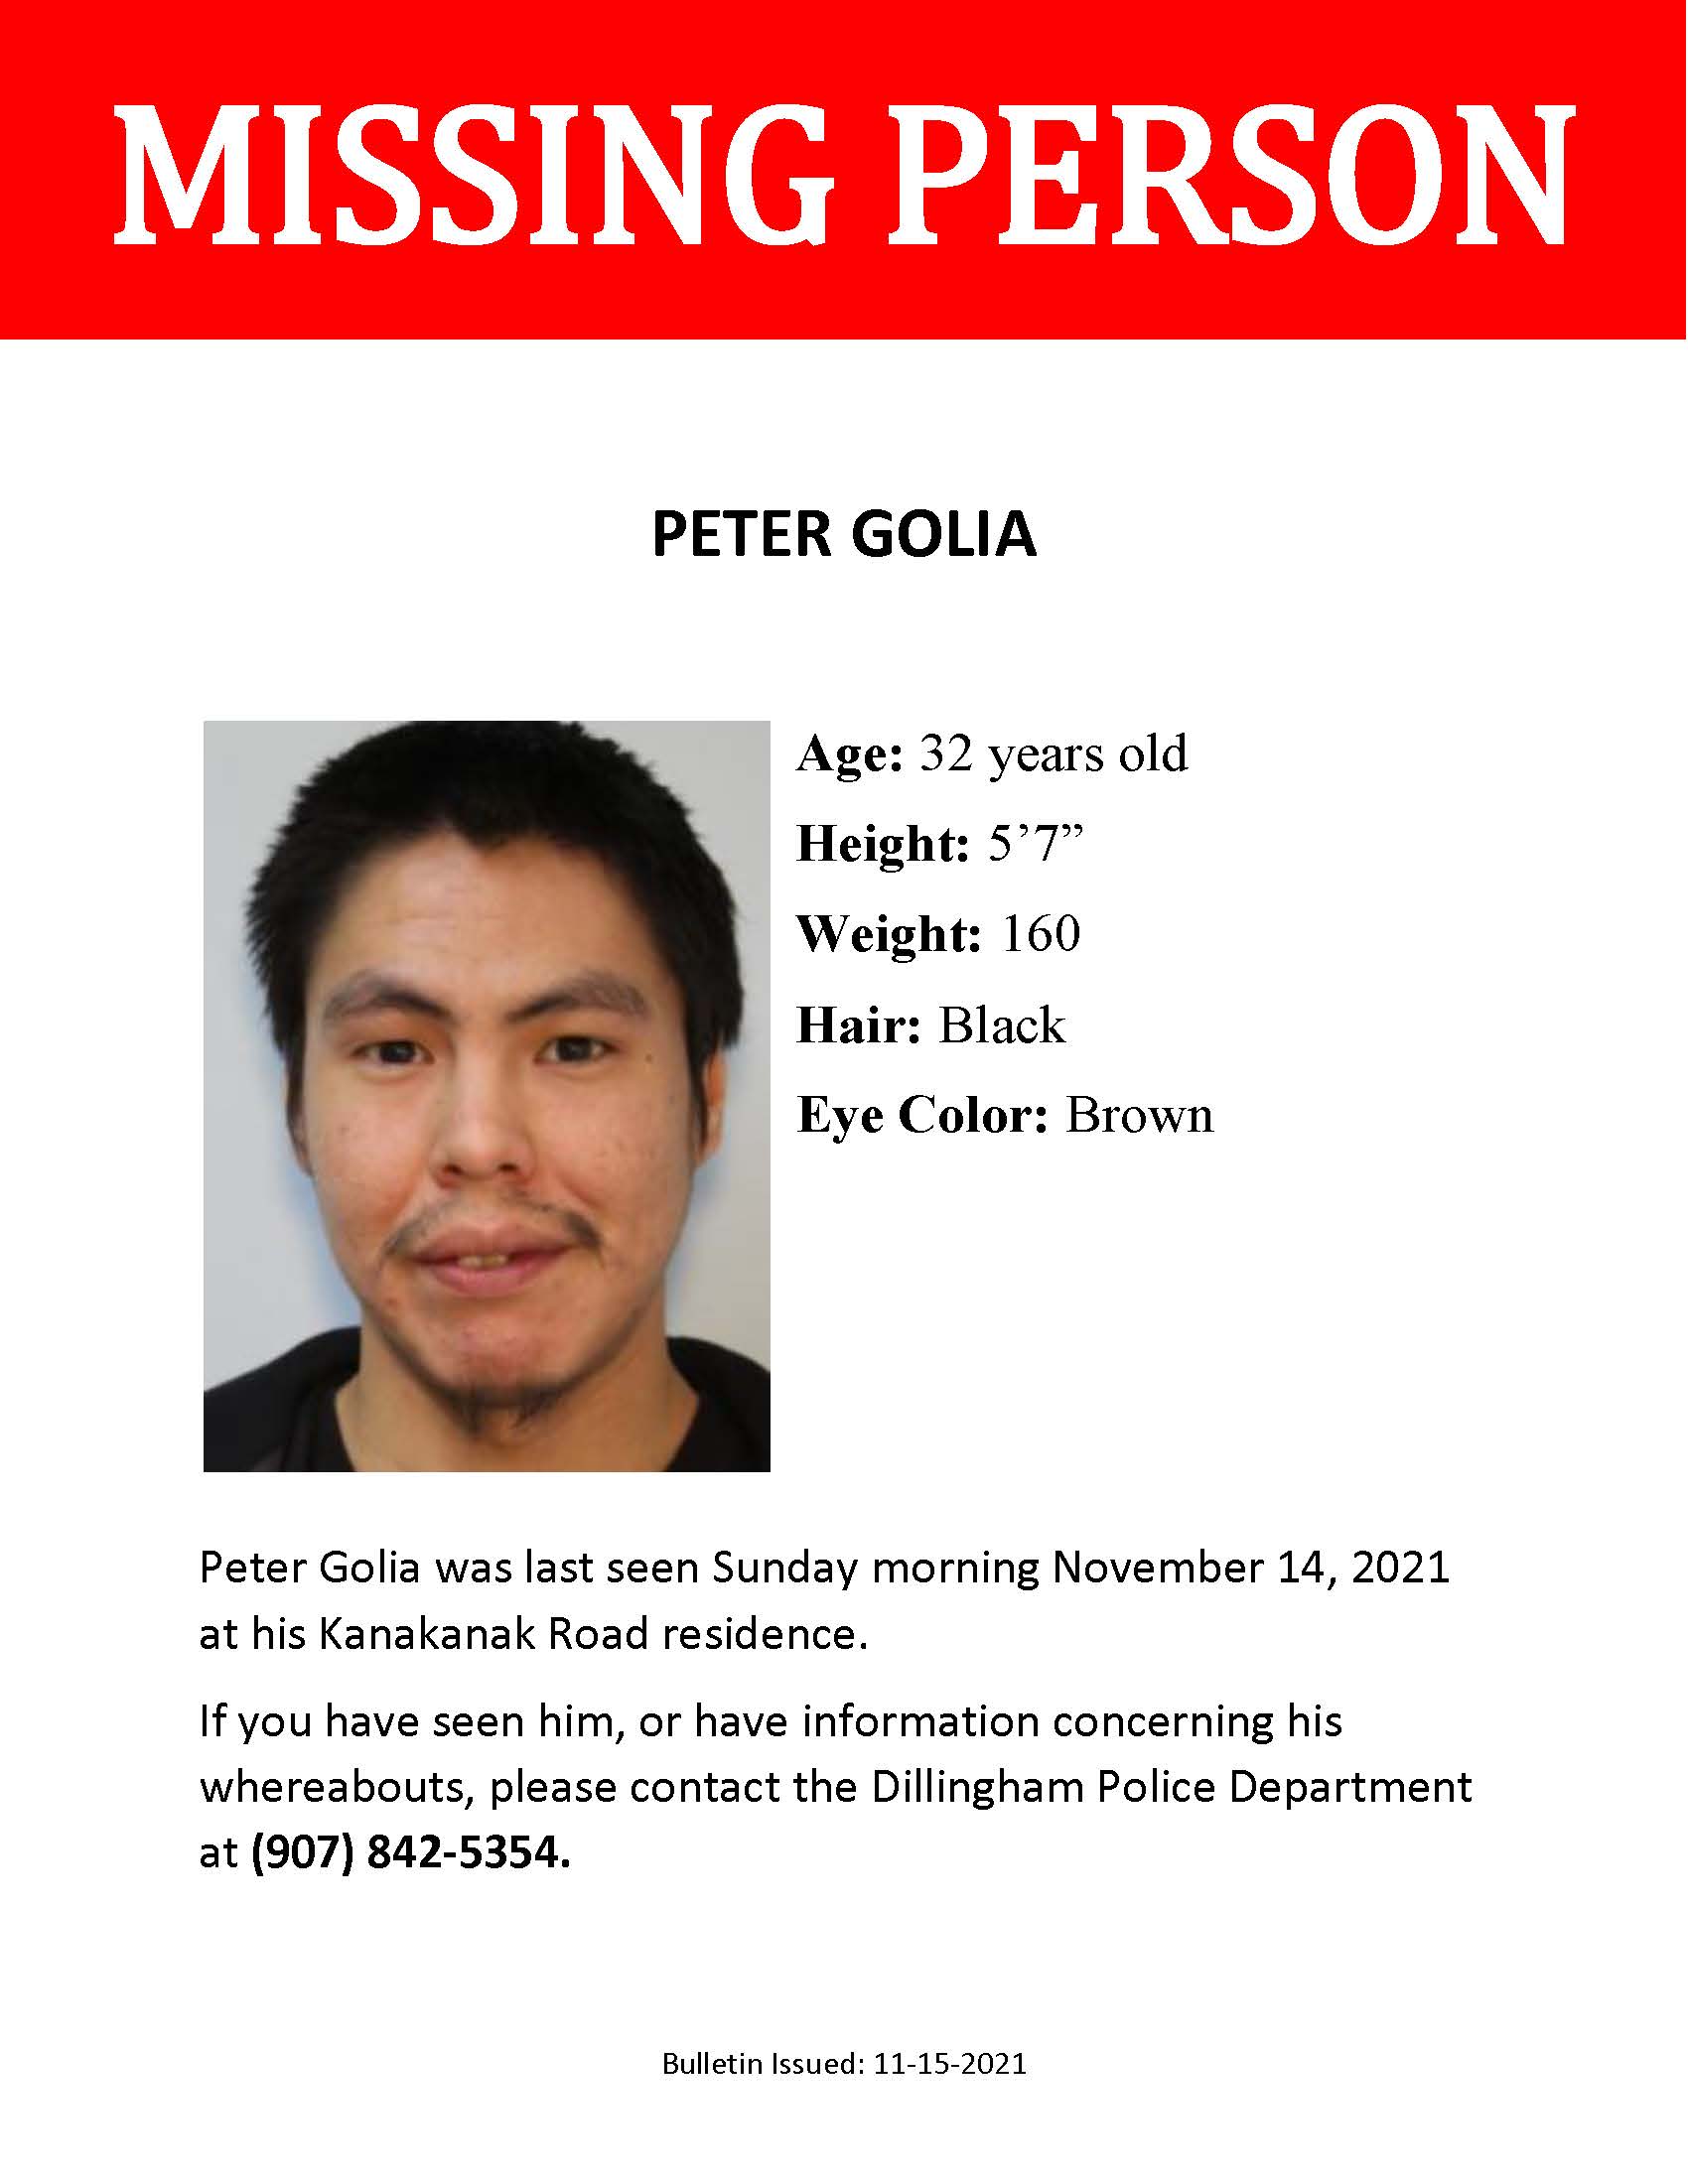 11/15/21 MISSING PERSON PETER GOLIA Dillingham, AK